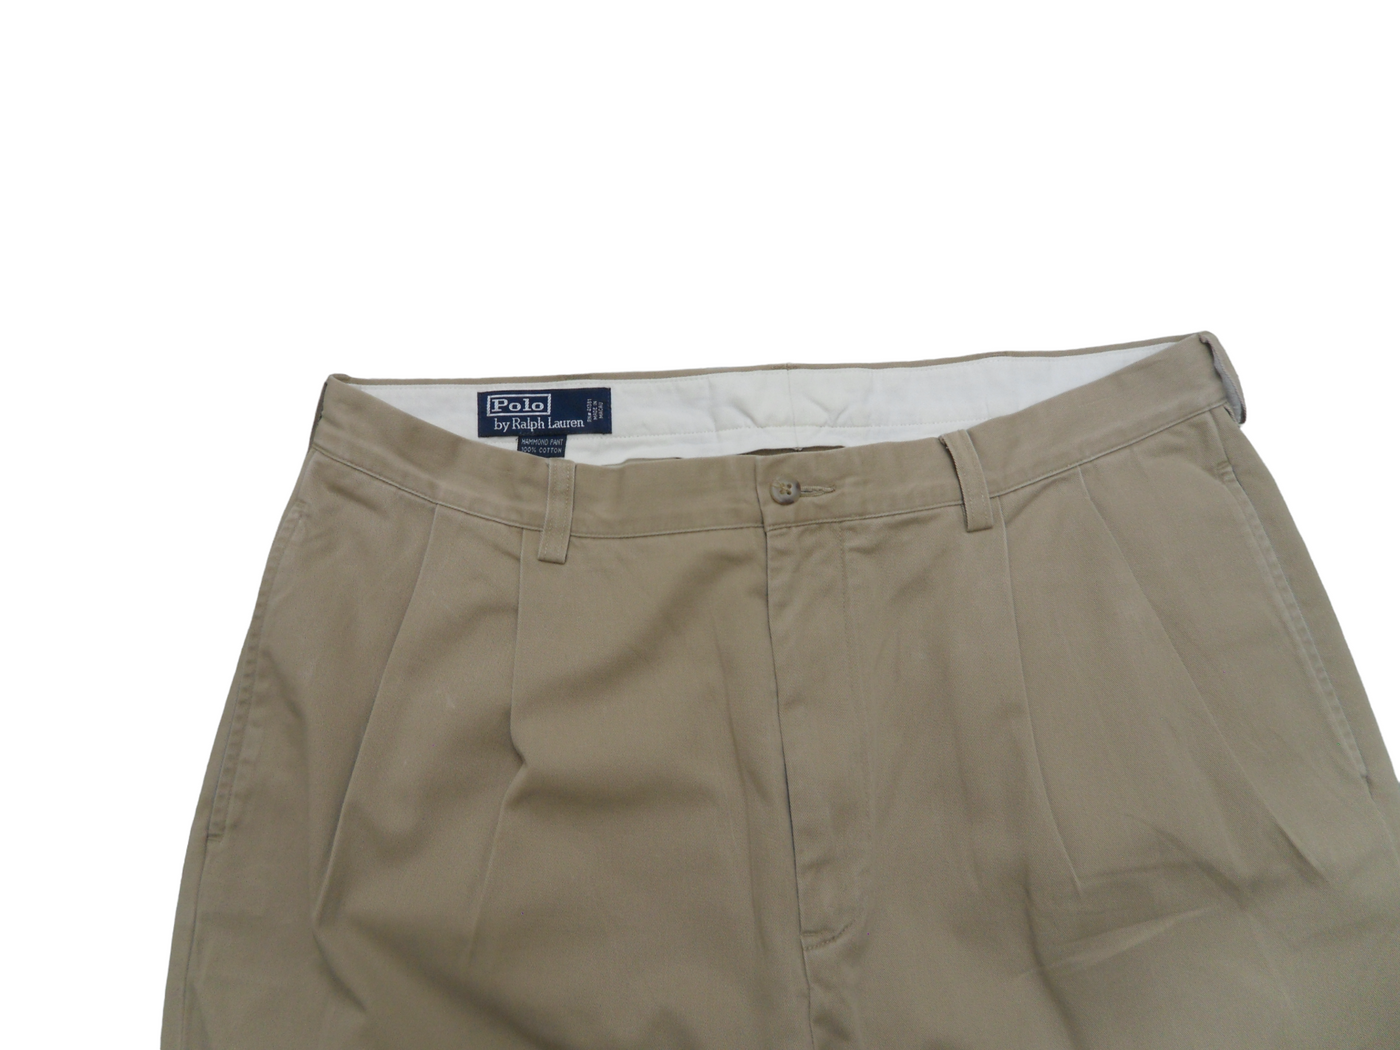 Vintage Polo Ralph Lauren Hammond Pants. Size 36/32